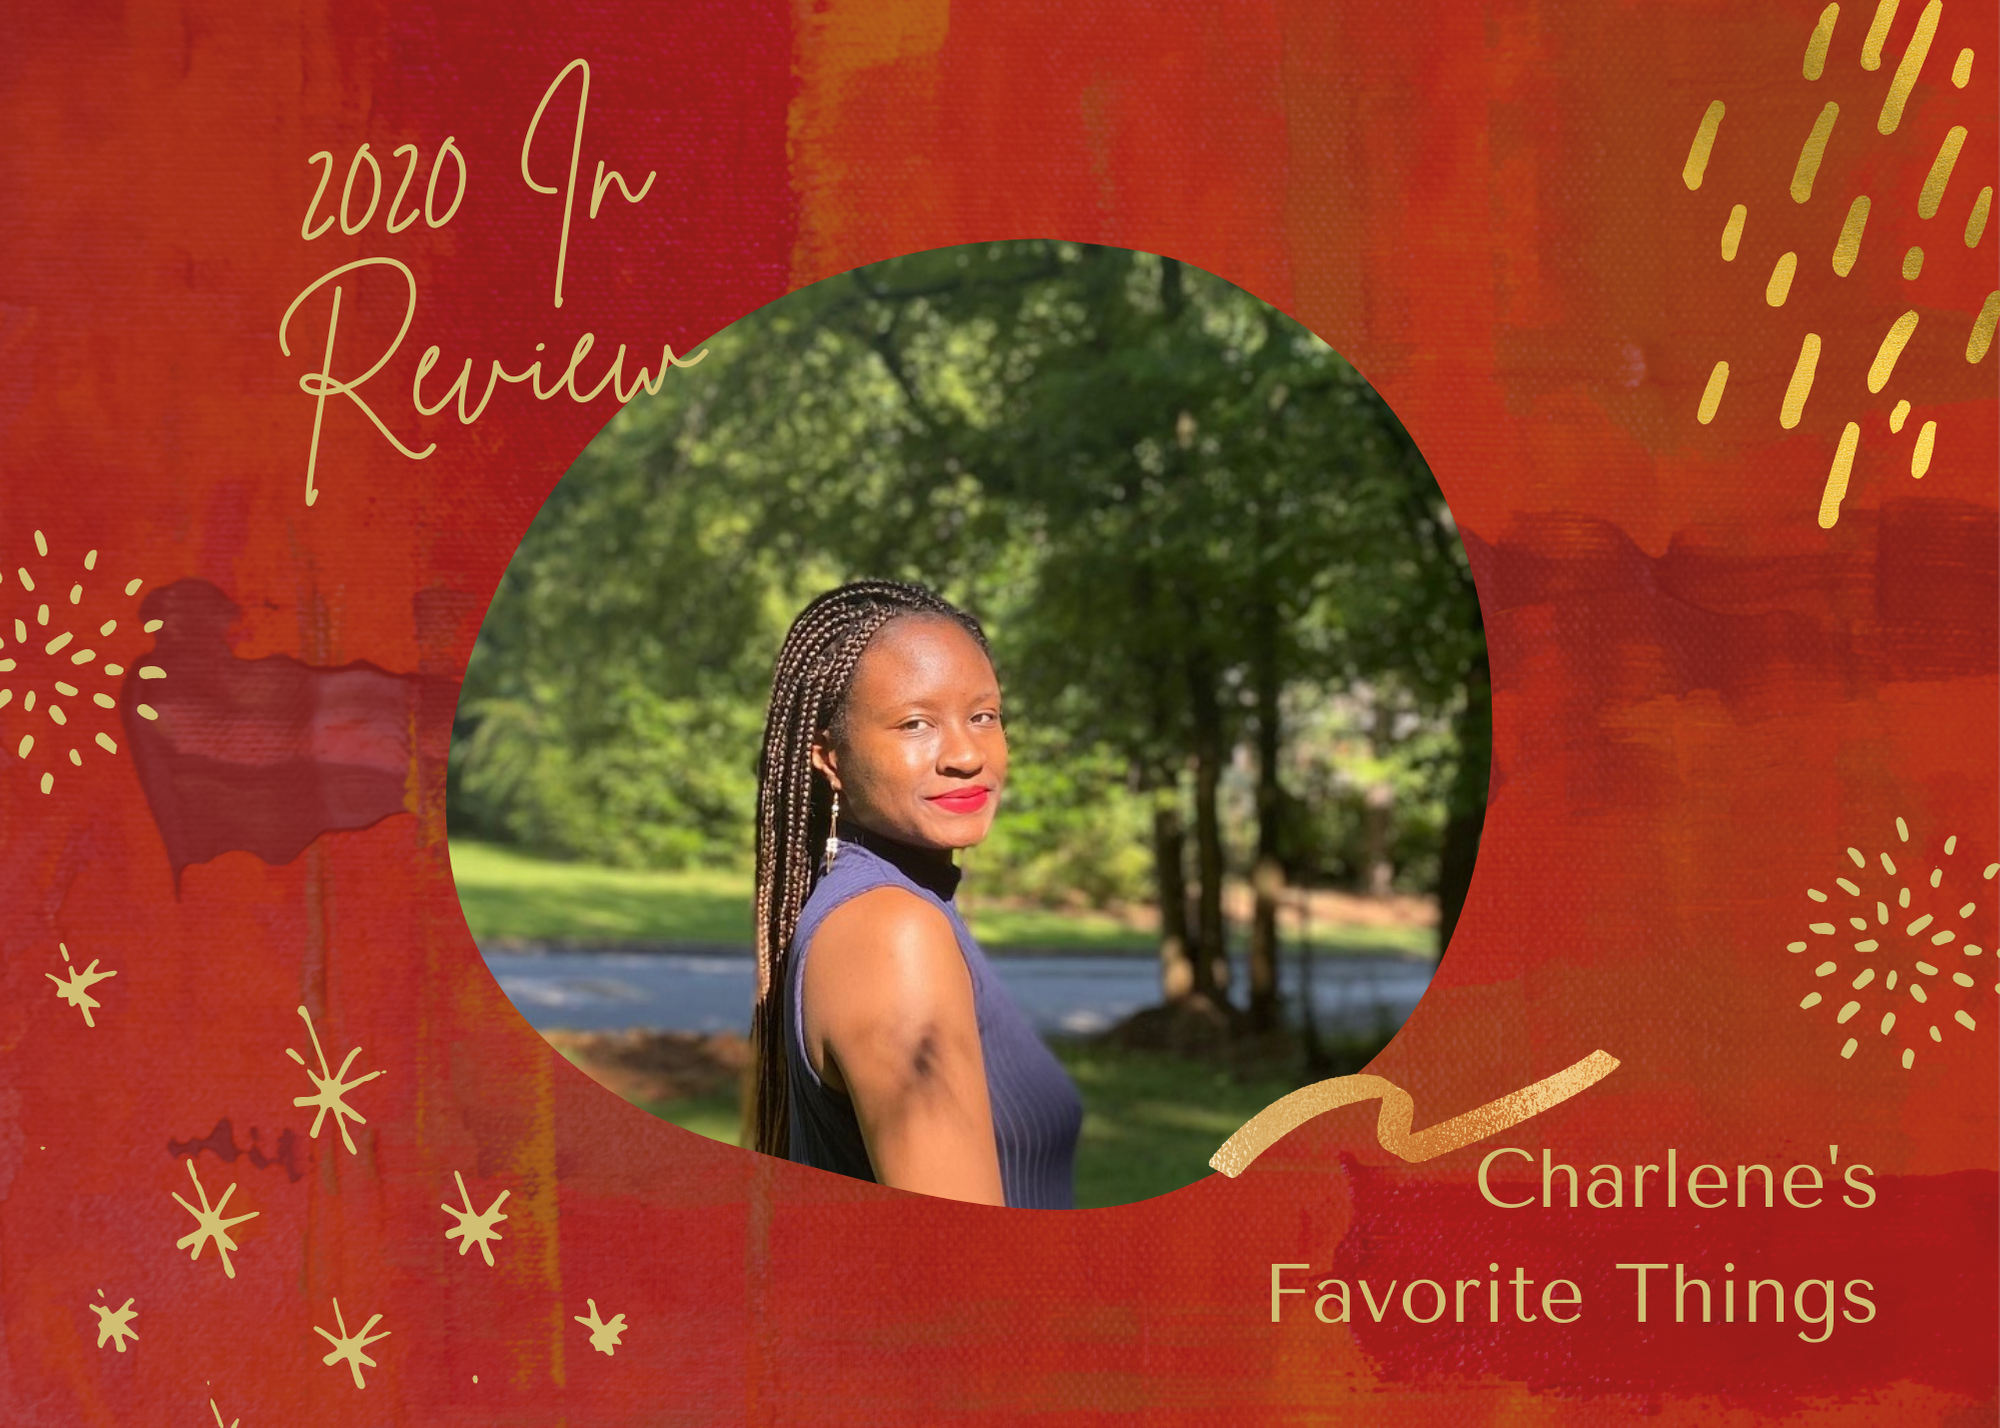 Charlene's 2020 in Review